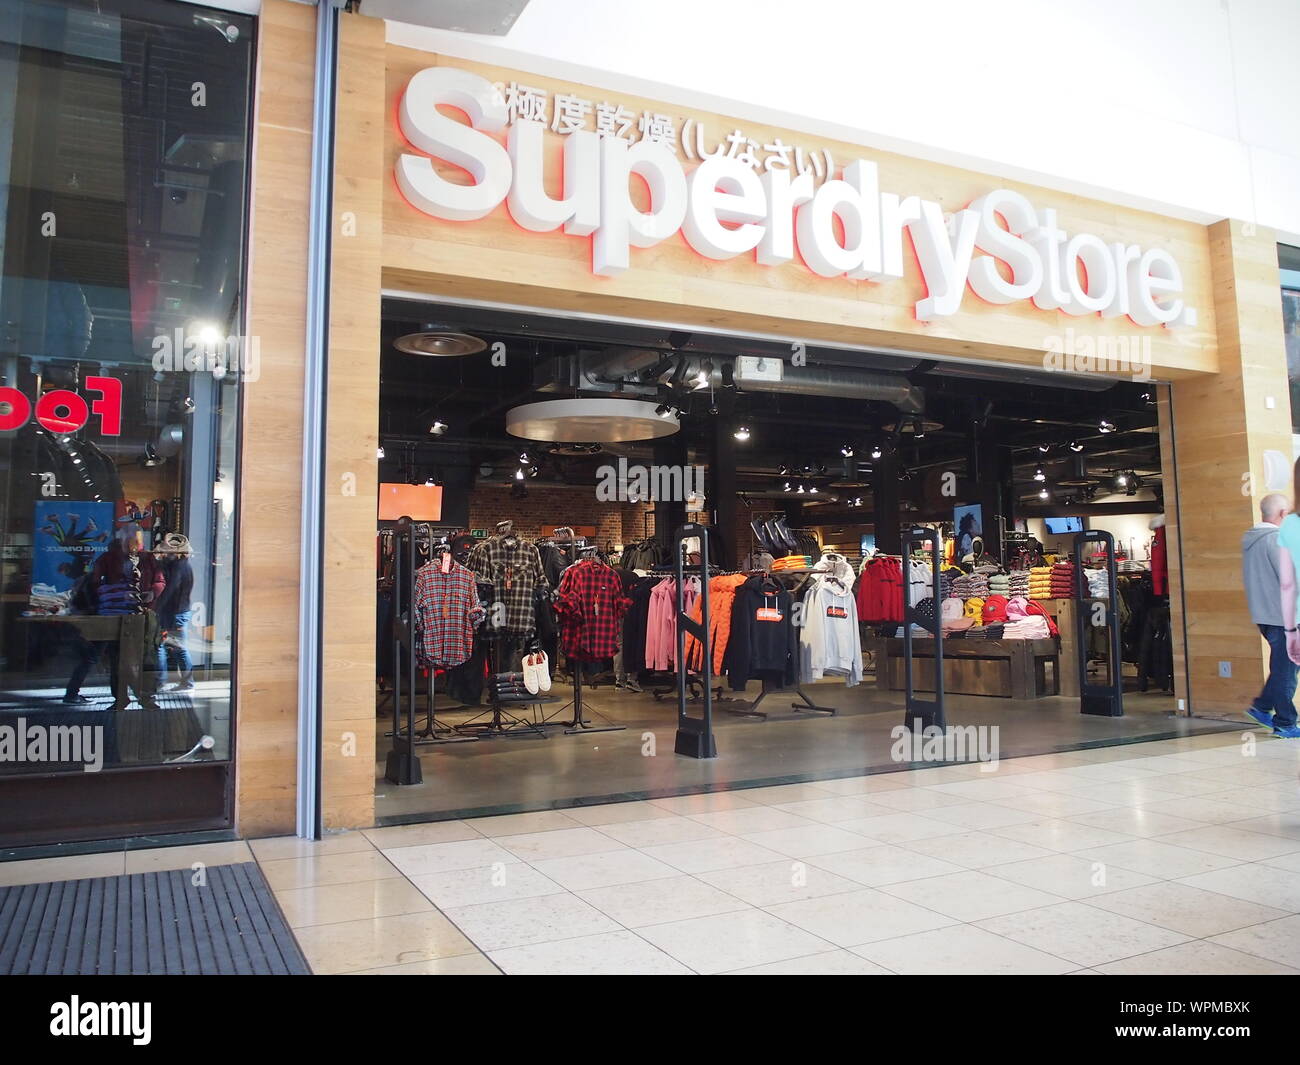 Superdry store in Intu shopping centre, Milton Keynes, UK Stock Photo -  Alamy